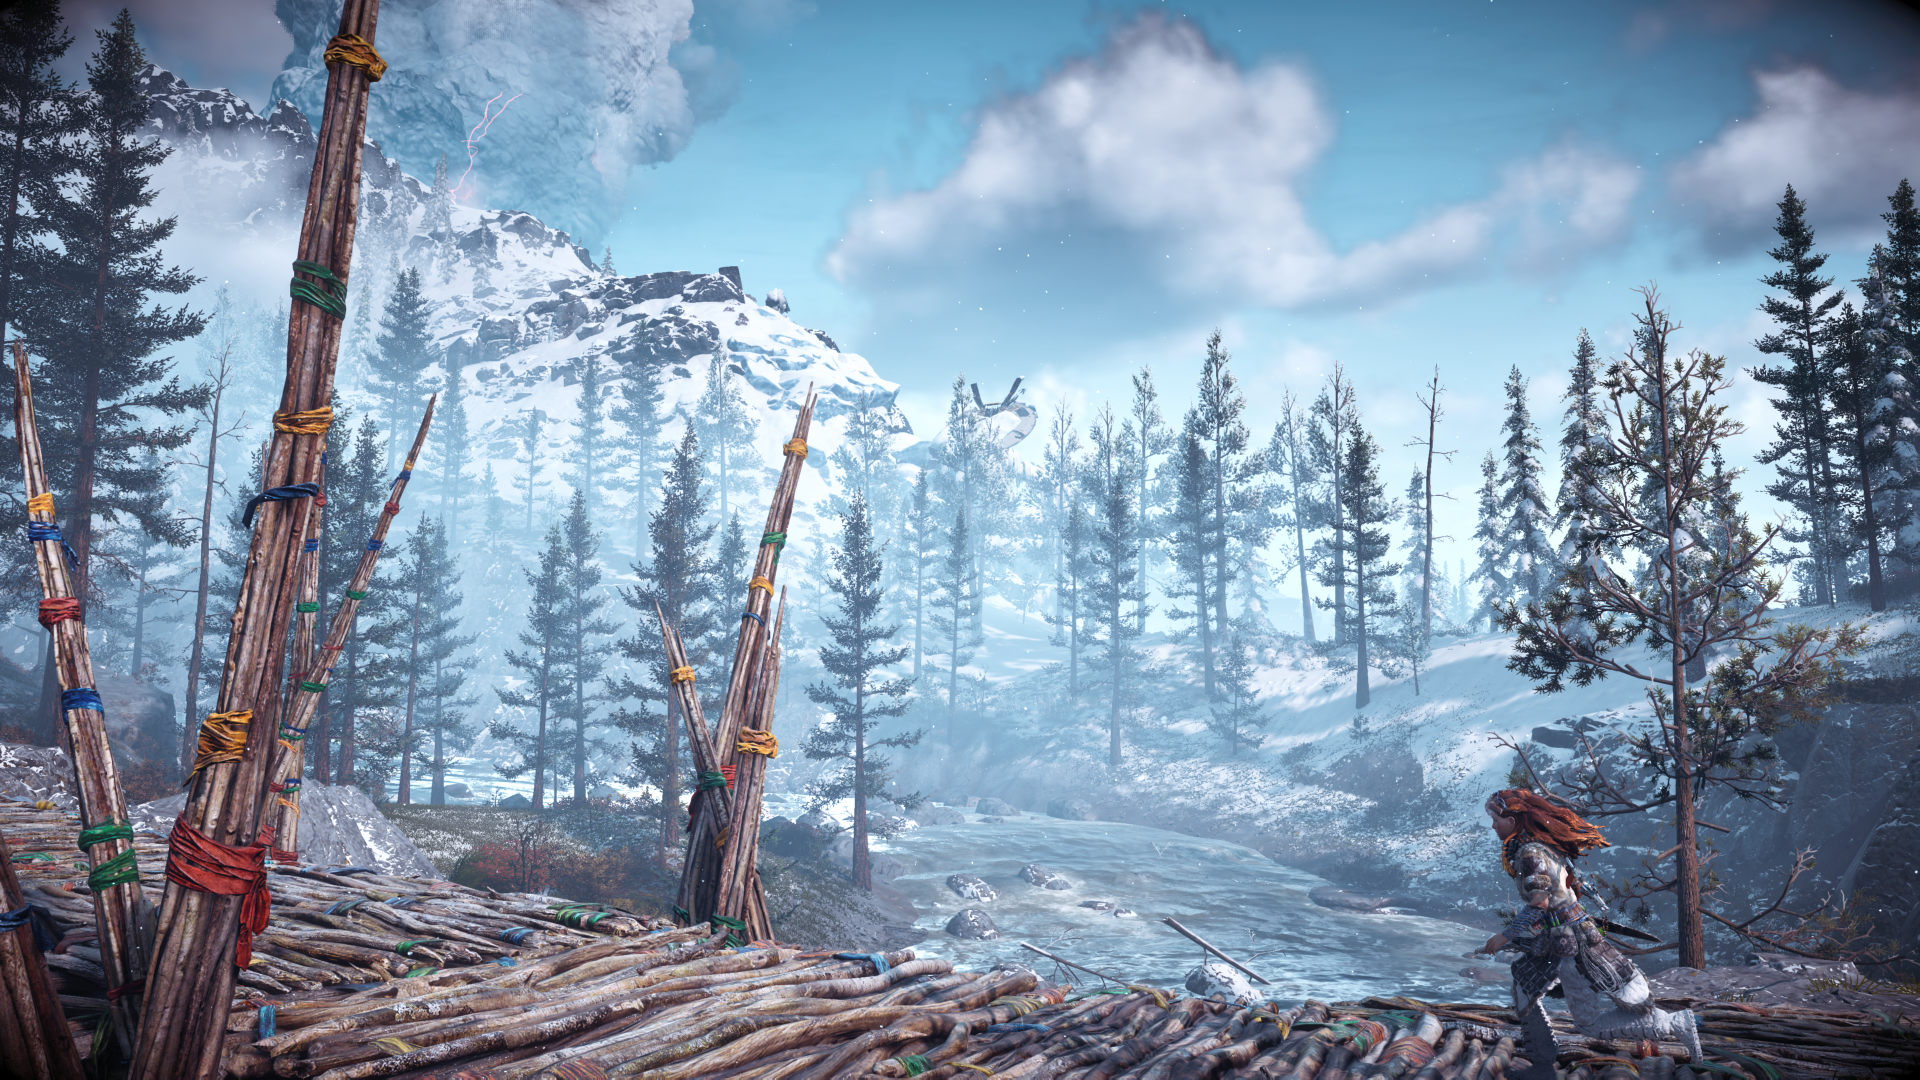 Horizon Zero Dawn: The Frozen Wilds” Review – SmashPad